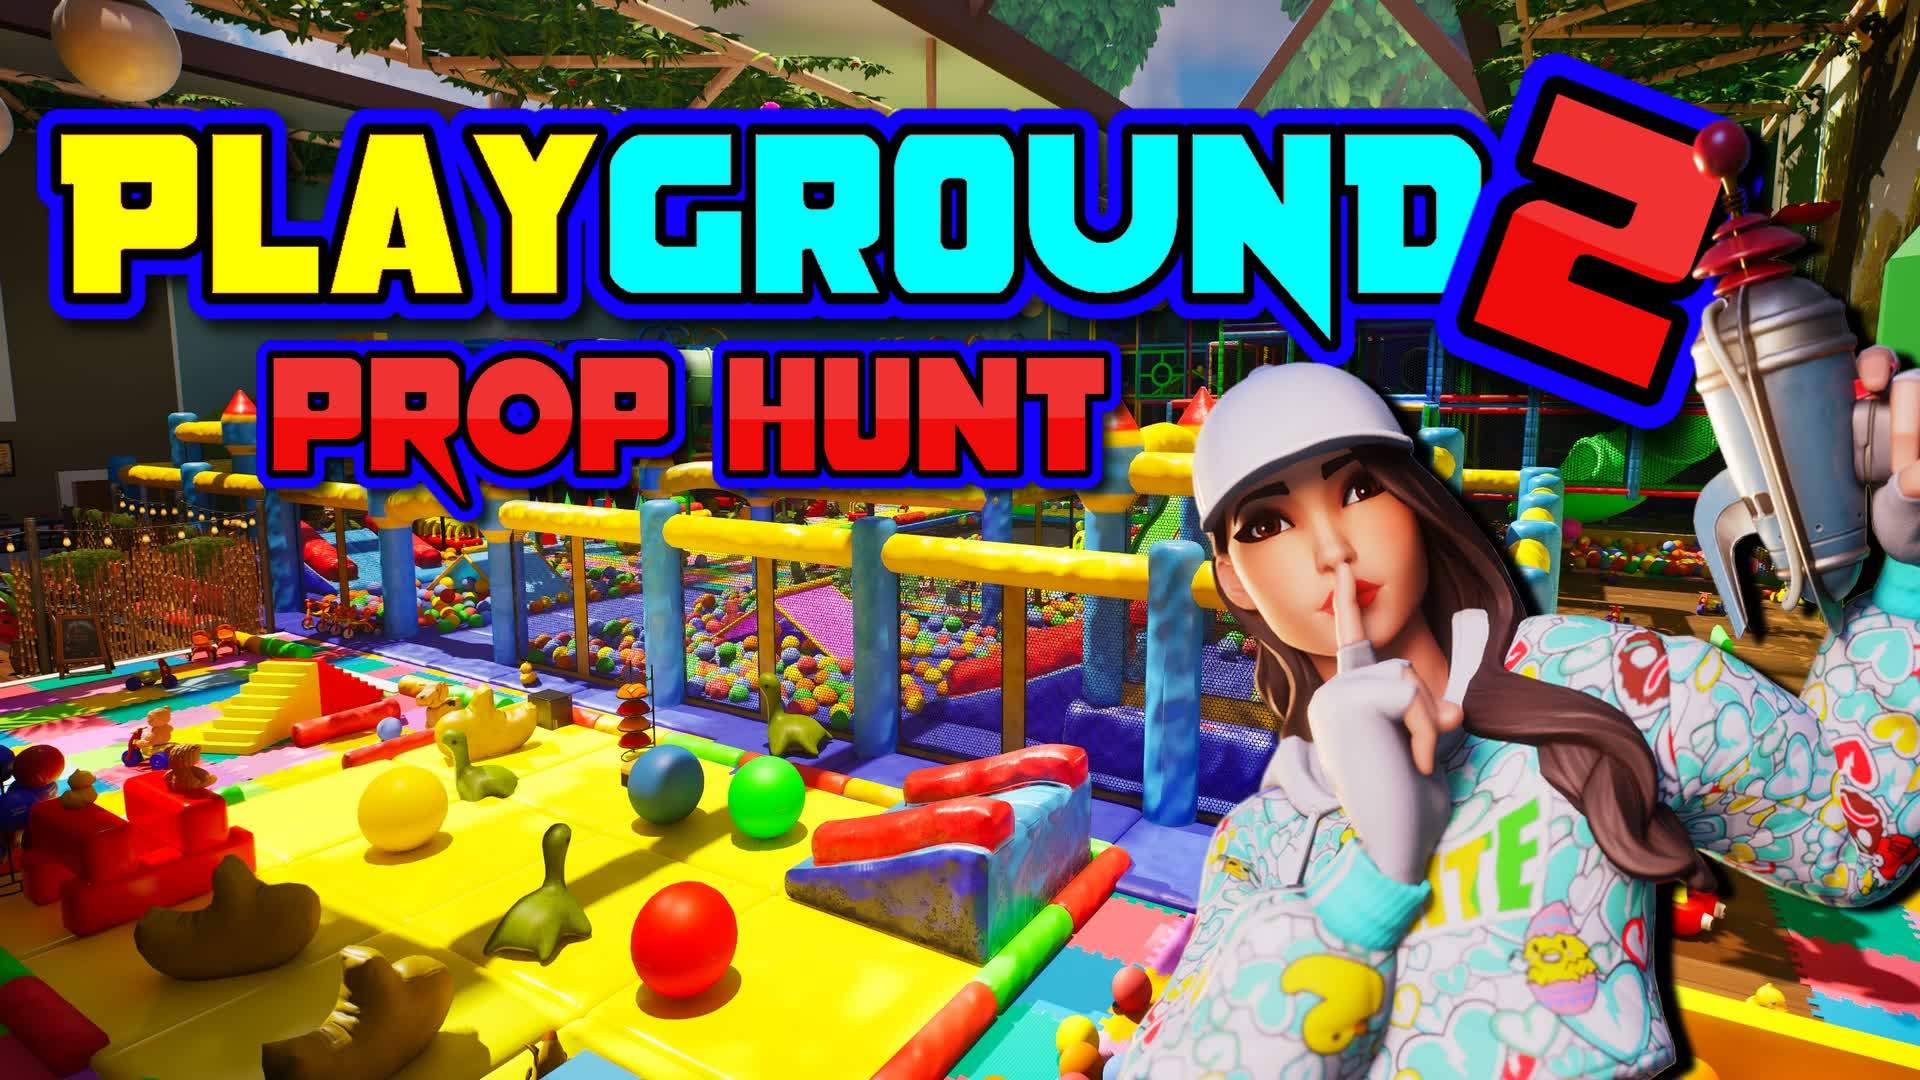 Playground2 - Prop hunt👀